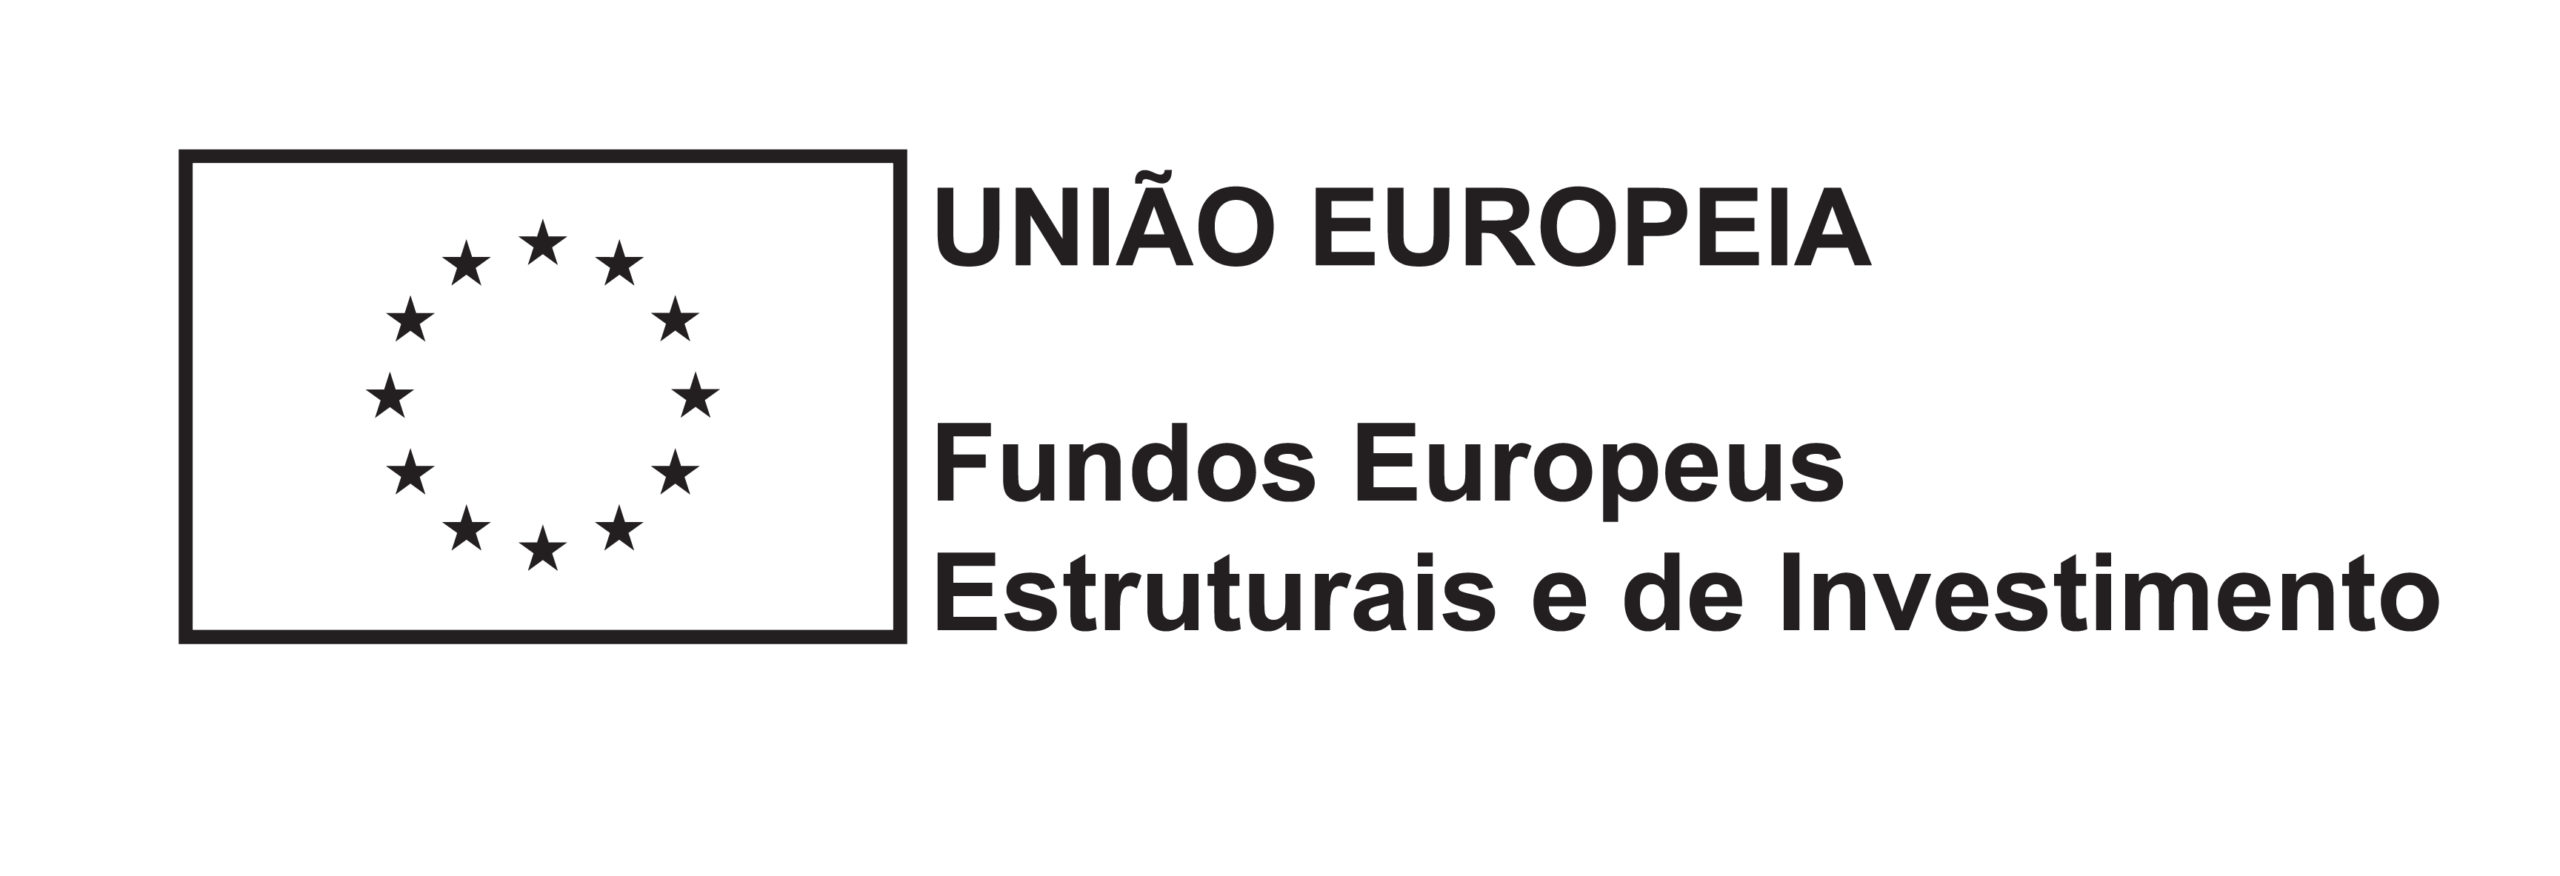 logo UE-FEEI_preto